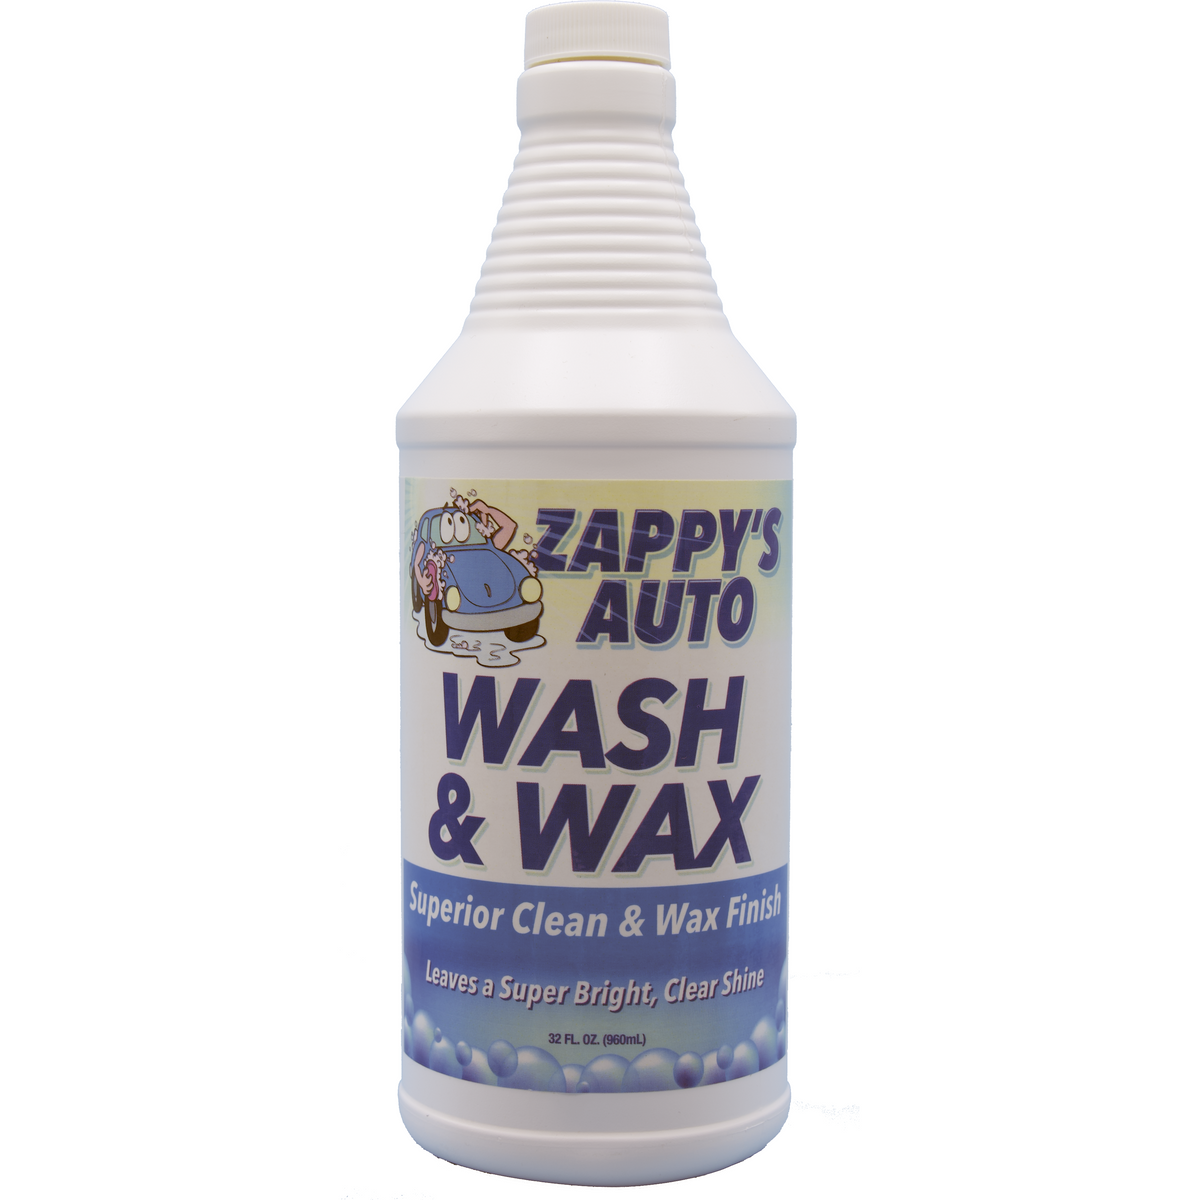 3 Stocking Stuffers Every Auto Detailer Needs – Zappy's Auto Washes